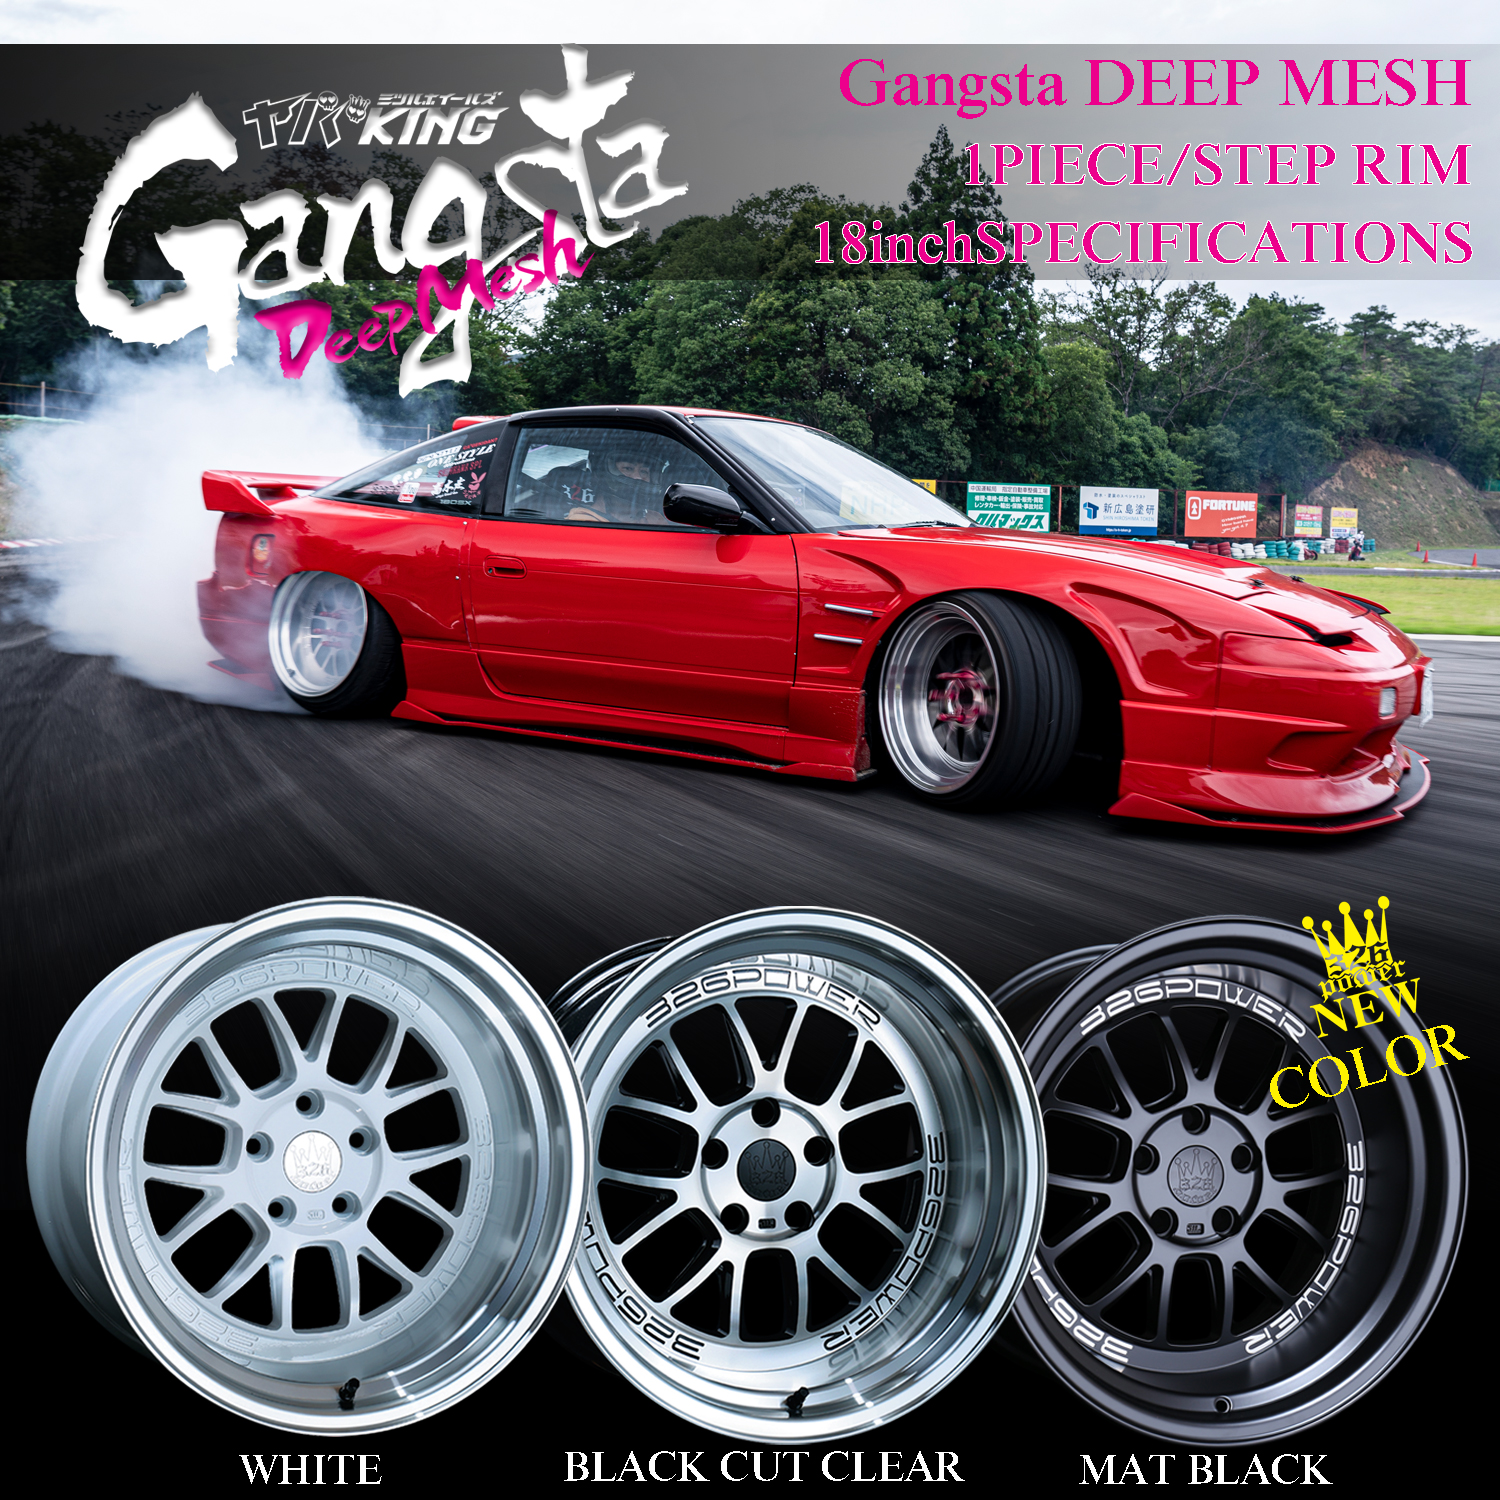 326 Power - Yaba King - Gangsta Deep Mesh Wheels